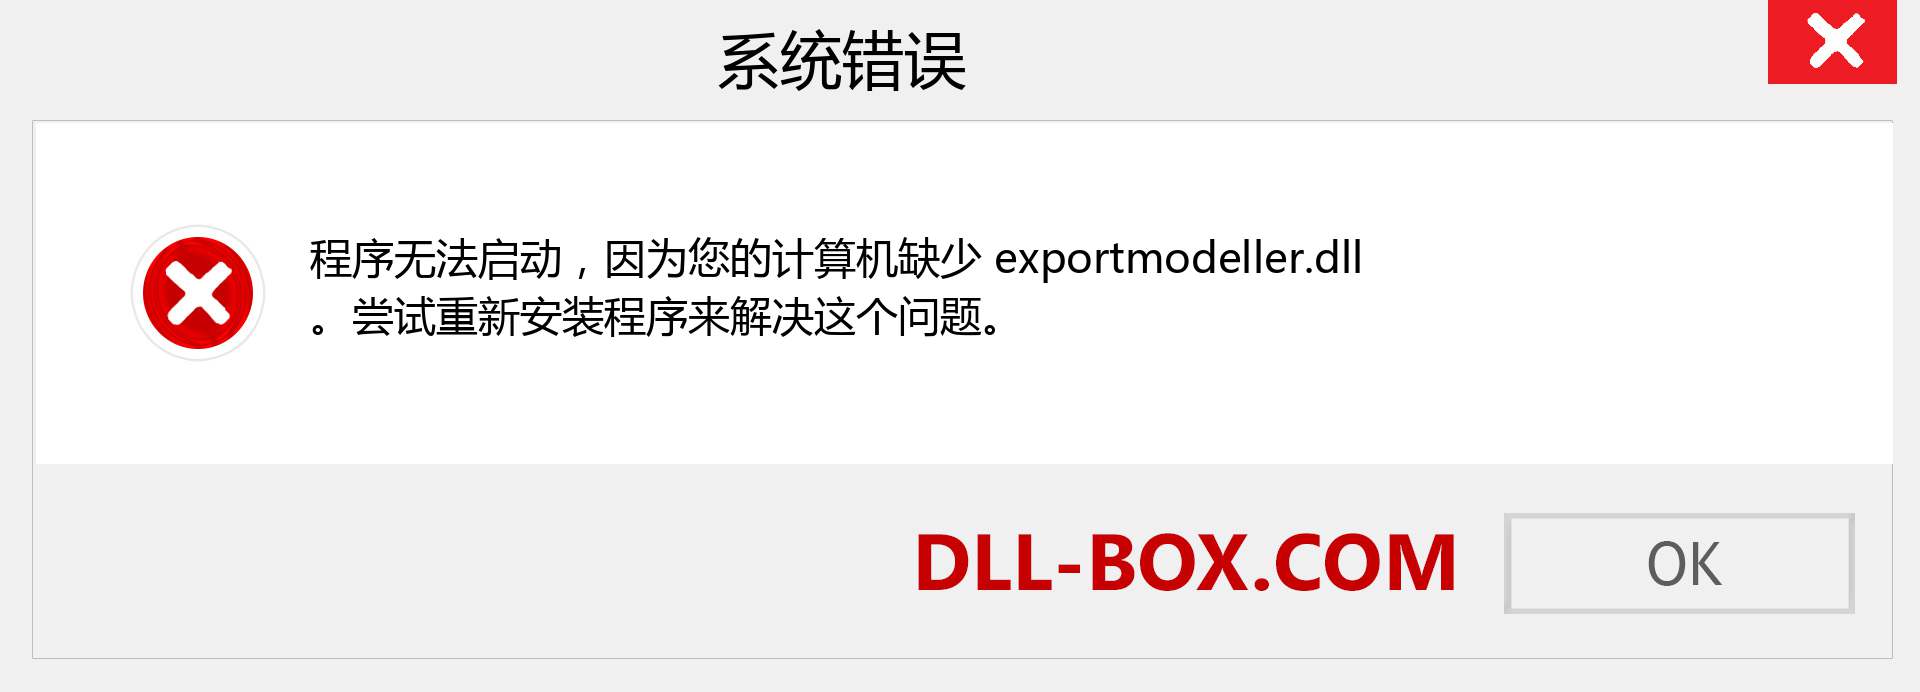 exportmodeller.dll 文件丢失？。 适用于 Windows 7、8、10 的下载 - 修复 Windows、照片、图像上的 exportmodeller dll 丢失错误